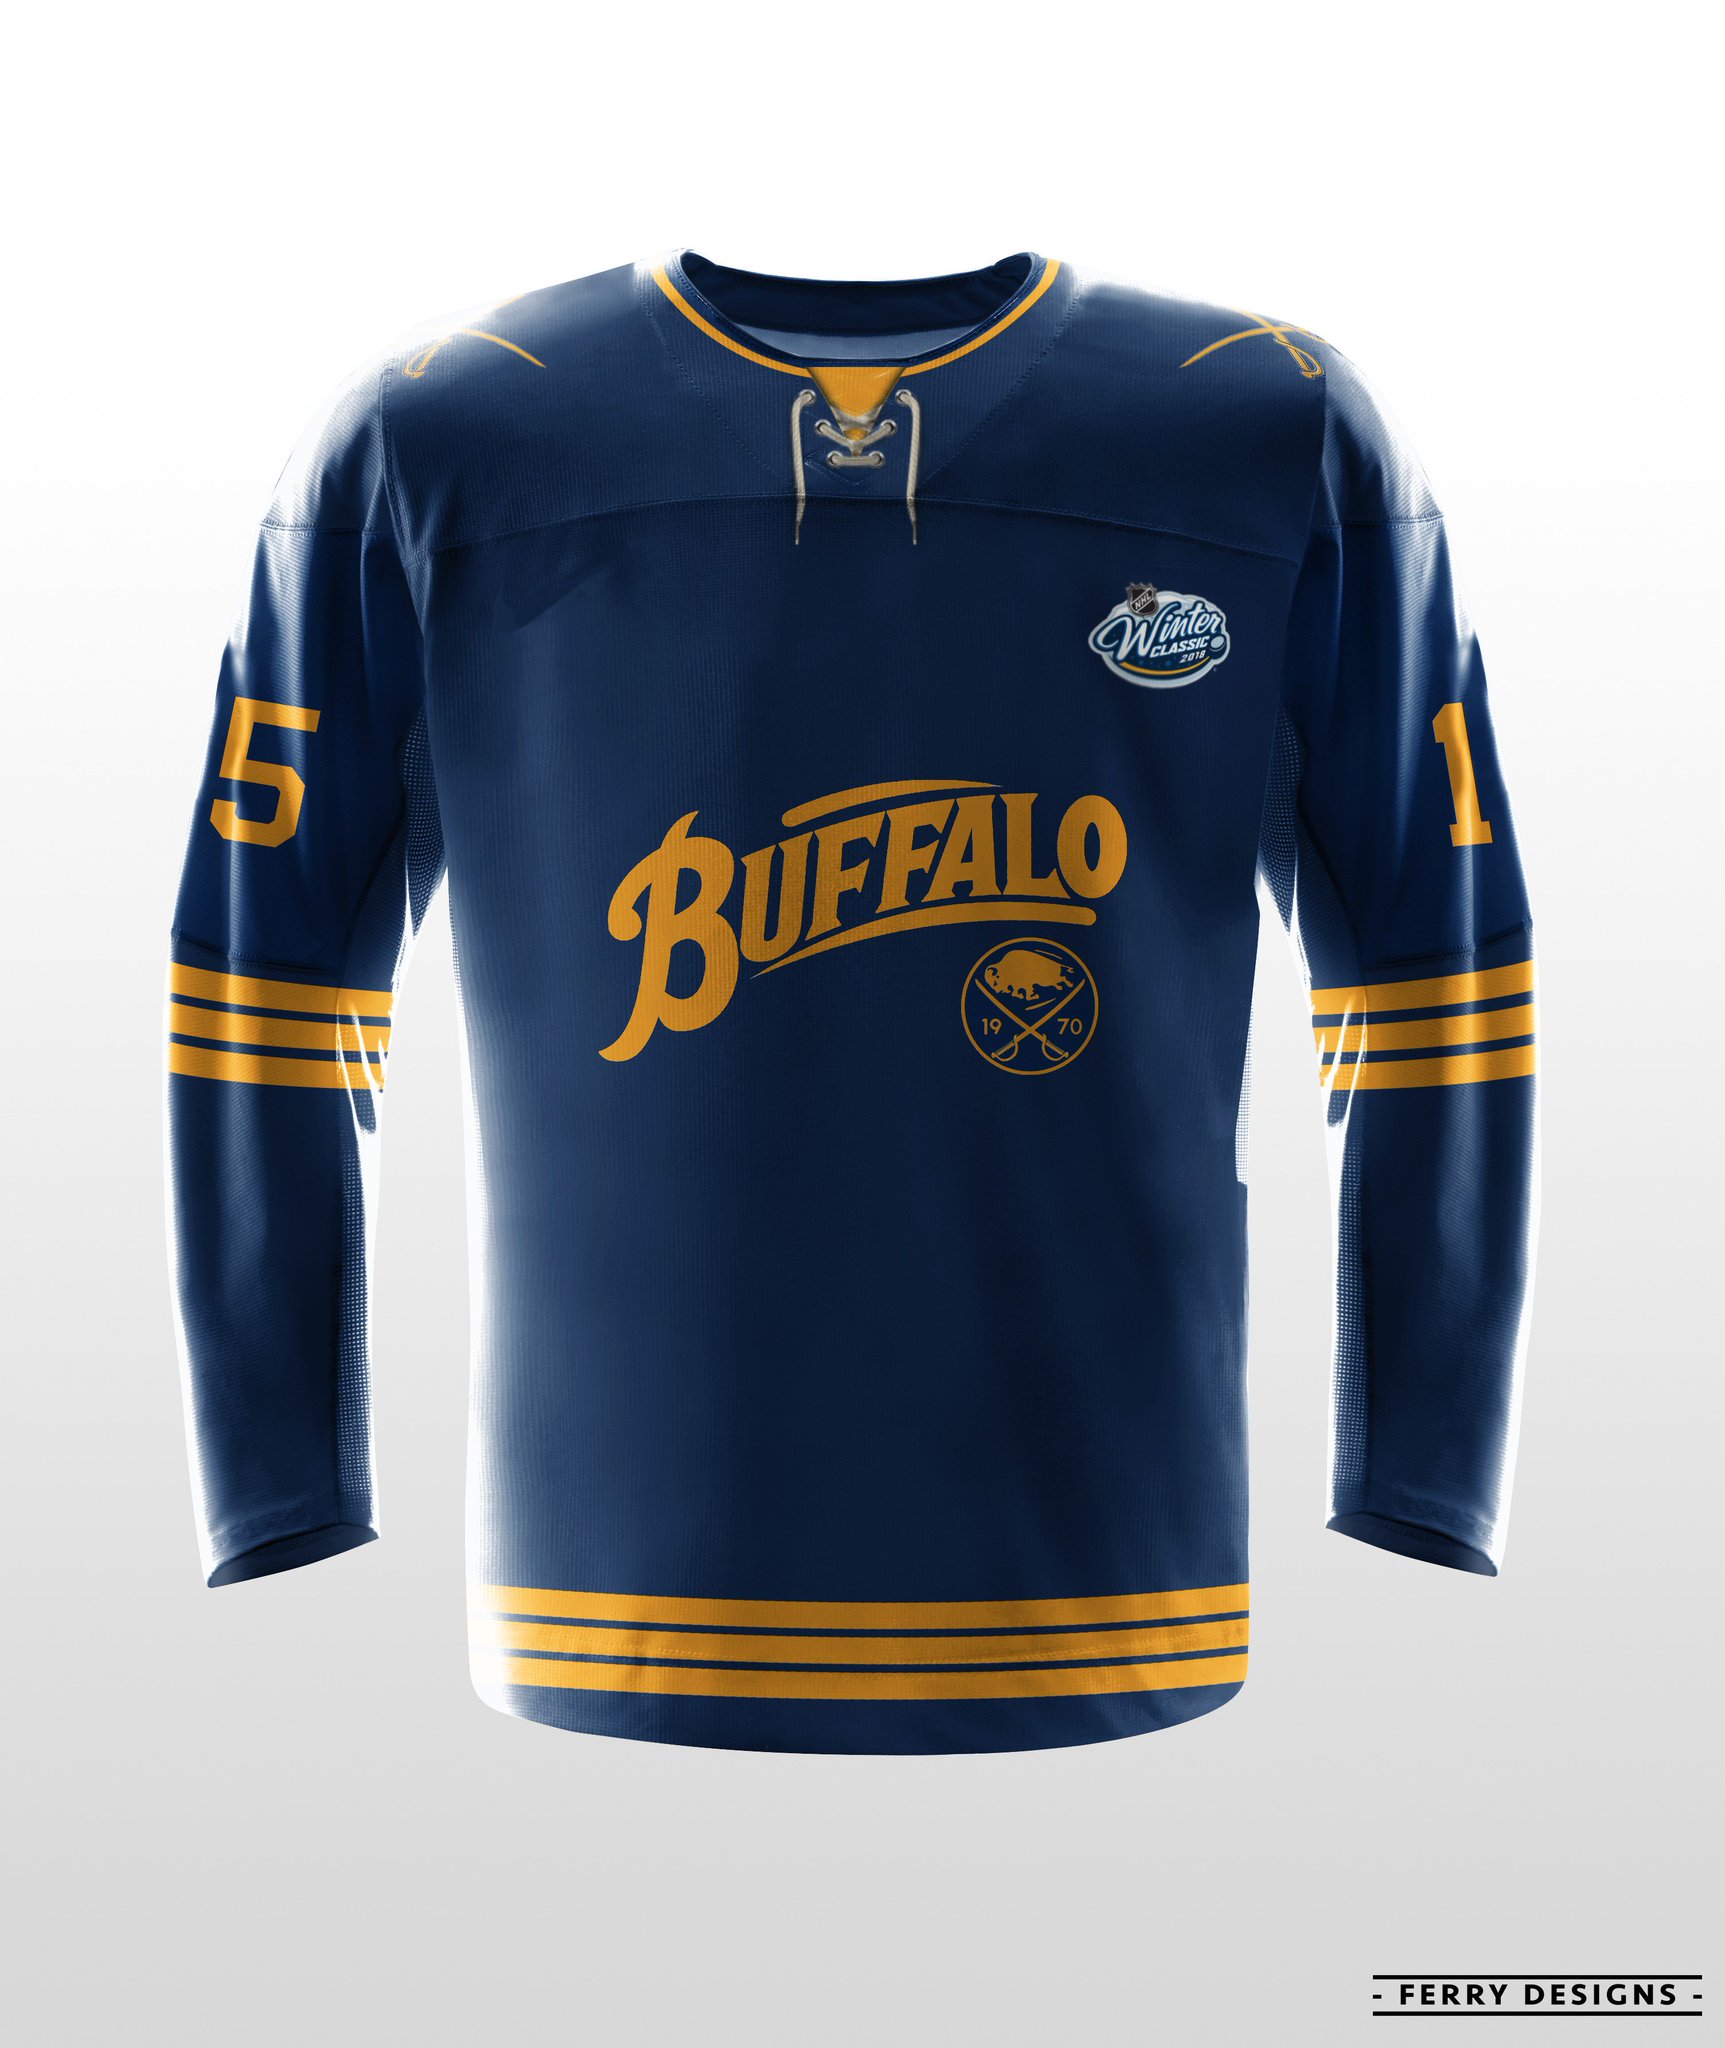 Buffalo Sabres Winter Classic jersey concept! - #nhl #hockey #buffalo # sabres #buffalosabres #ny #sport #sports #sportsdesign